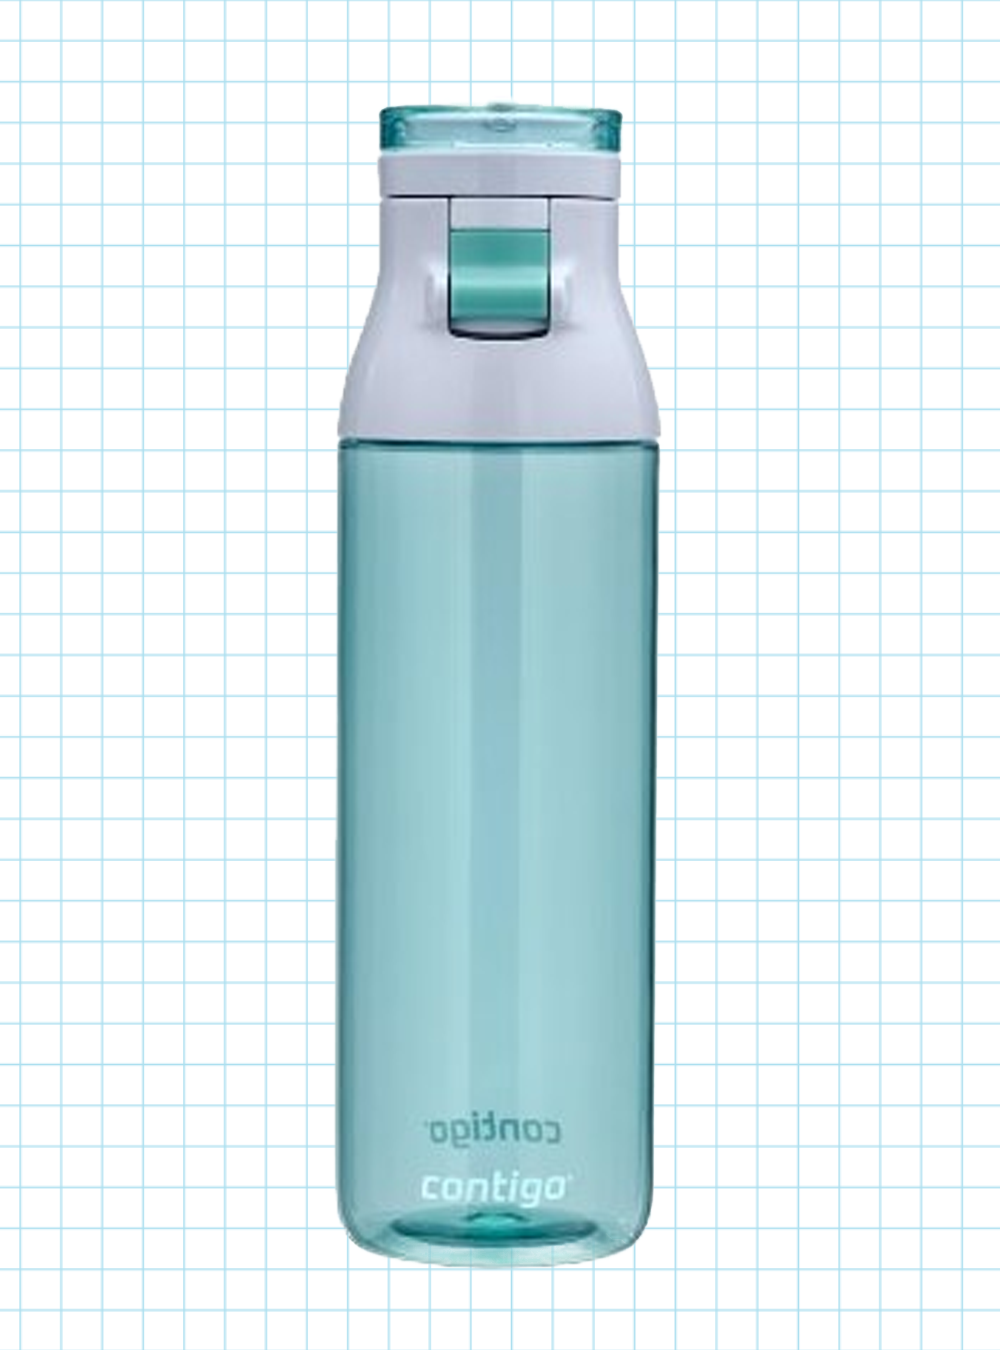 best quality water bottle brands